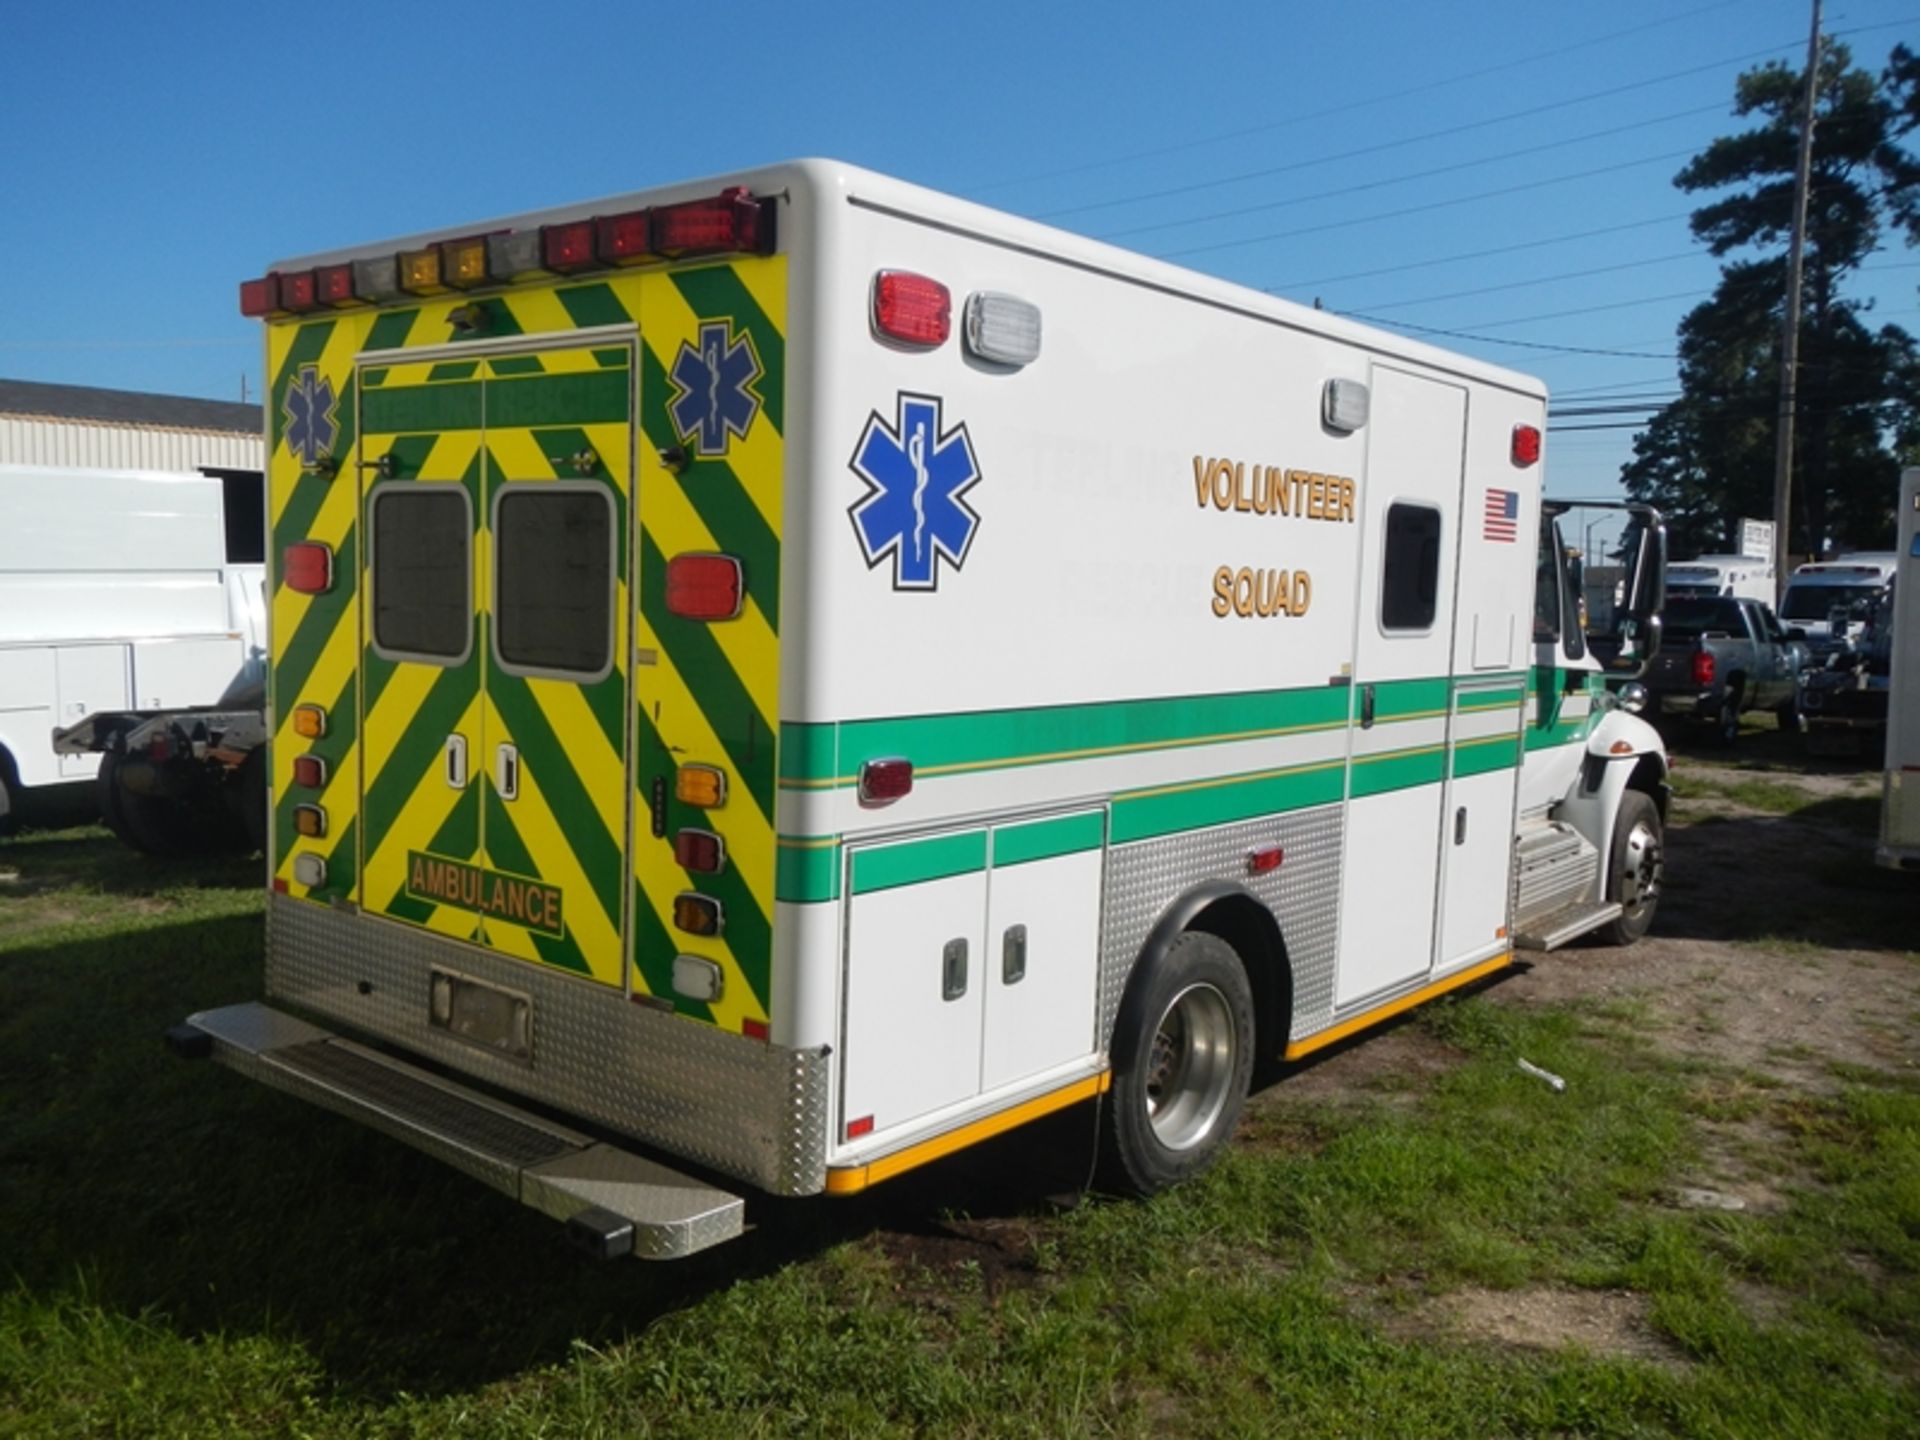 2015 INTERNATIONAL 4000 Medium Duty ambulance 75,000 miles - 1HTMYSKM9FH525657 - Image 3 of 6